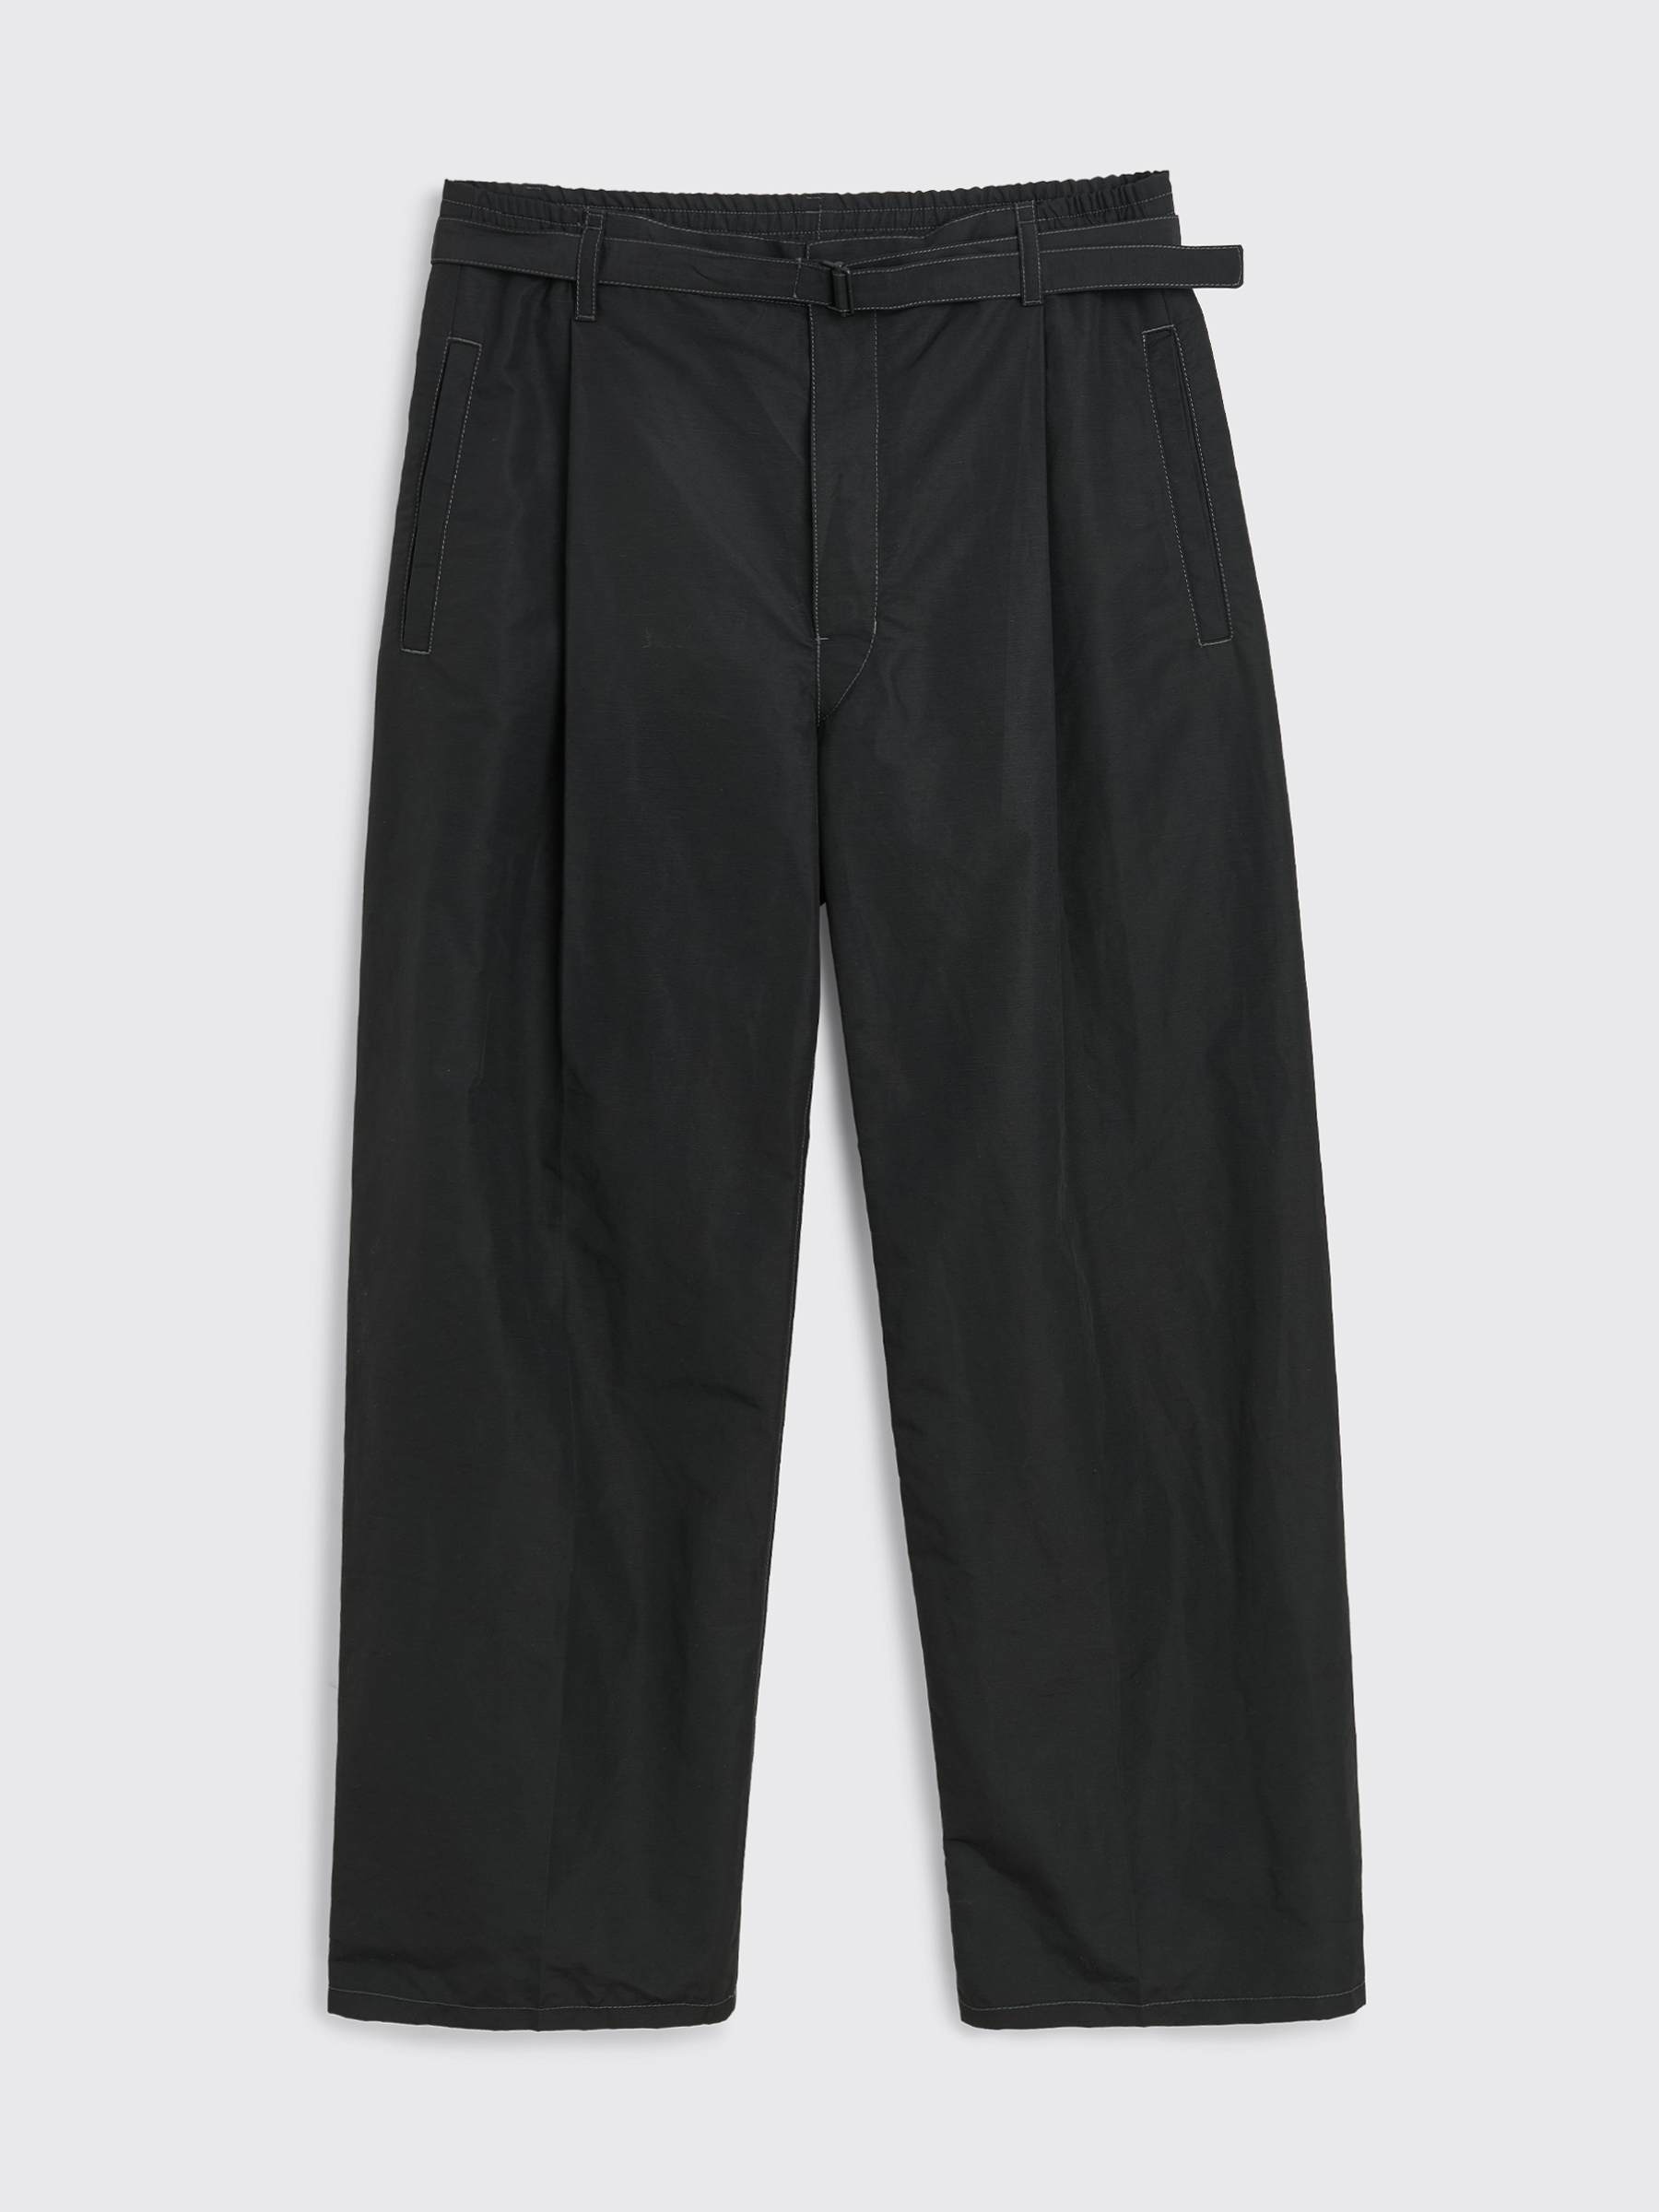 Très Bien - Lemaire Belted Easy Pants Black